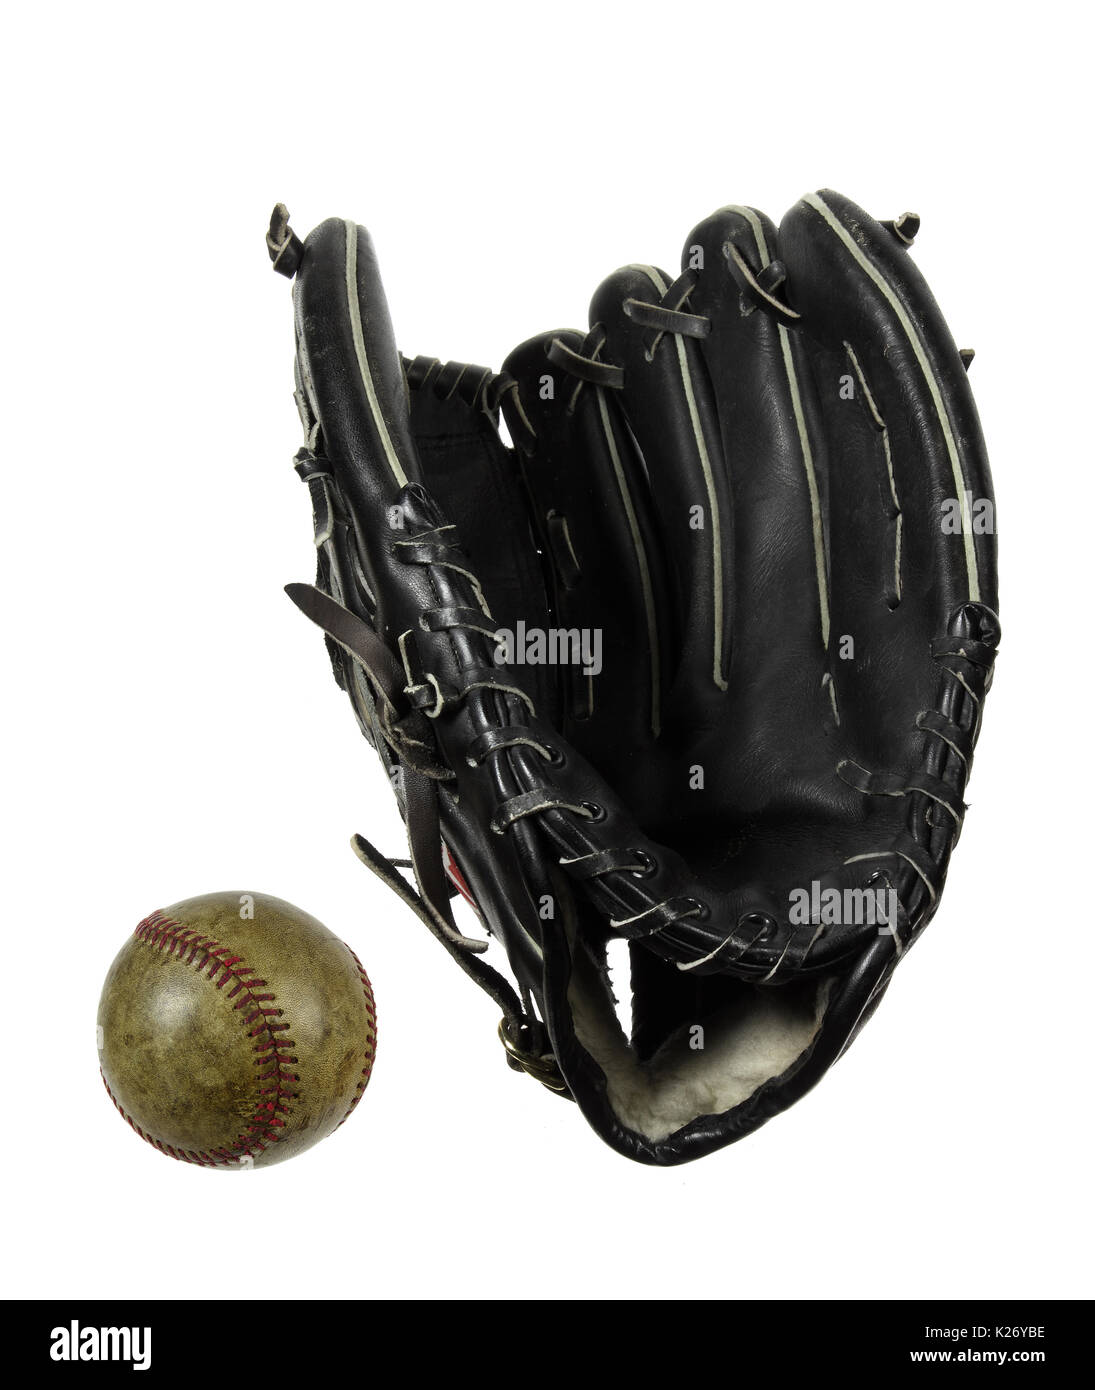 Baseball Glove and Ball on White Background Stock Photo